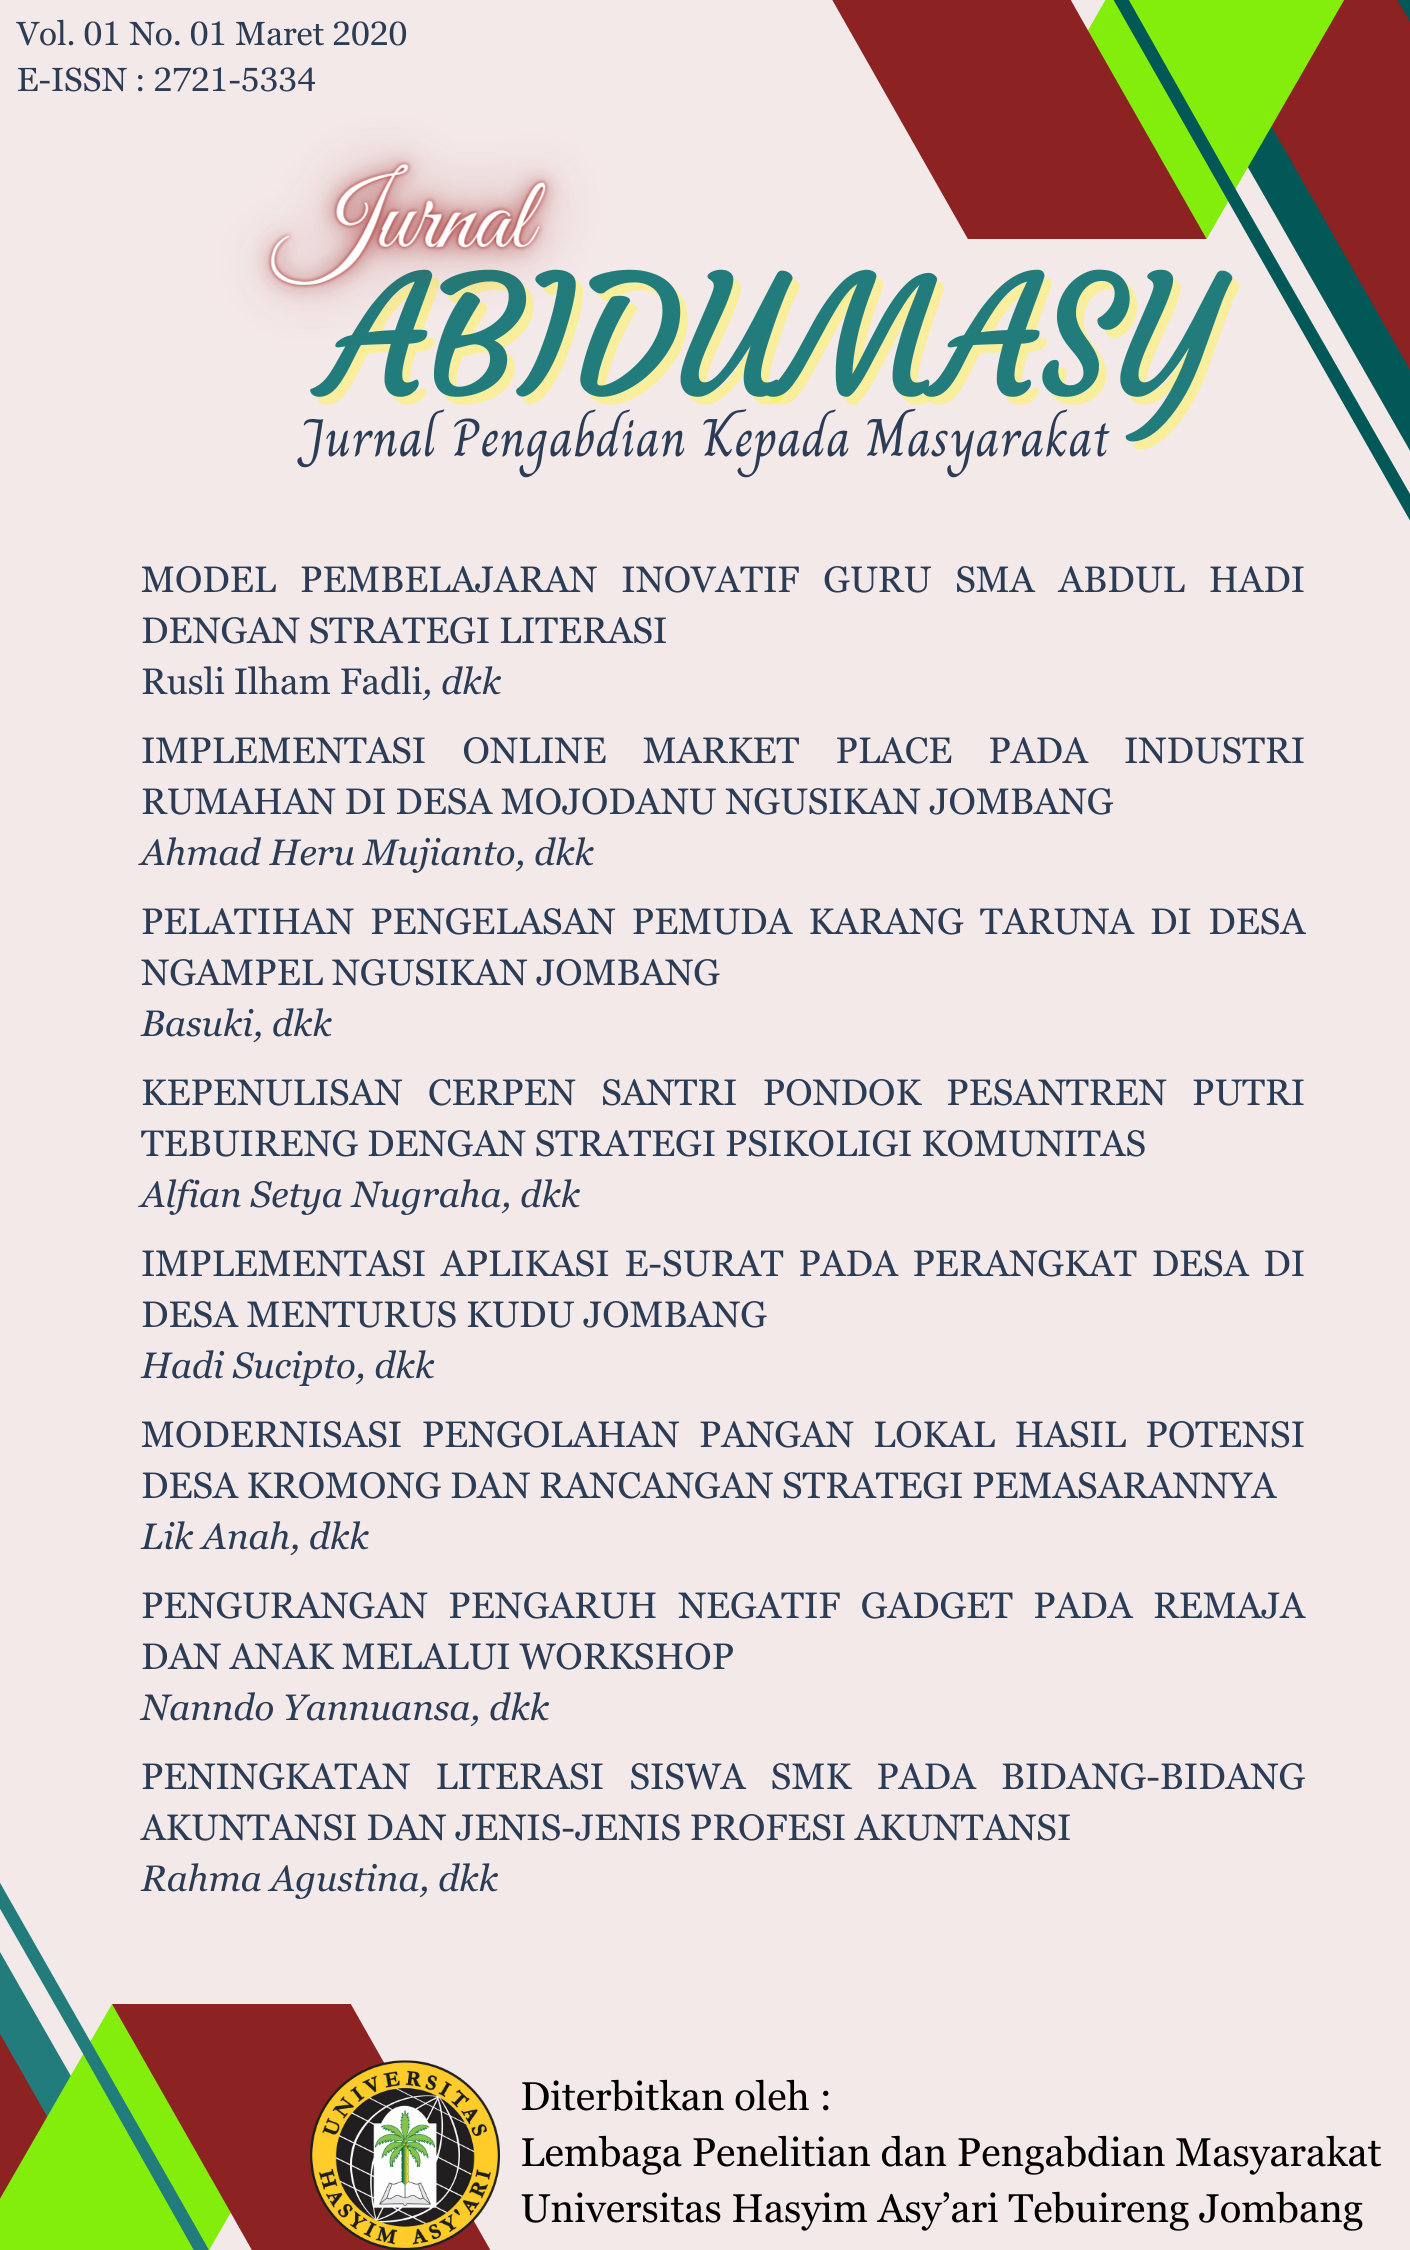 					View Vol. 1 No. 1 (2020): ABIDUMASY : JURNAL PENGABDIAN KEPADA MASYARAKAT
				